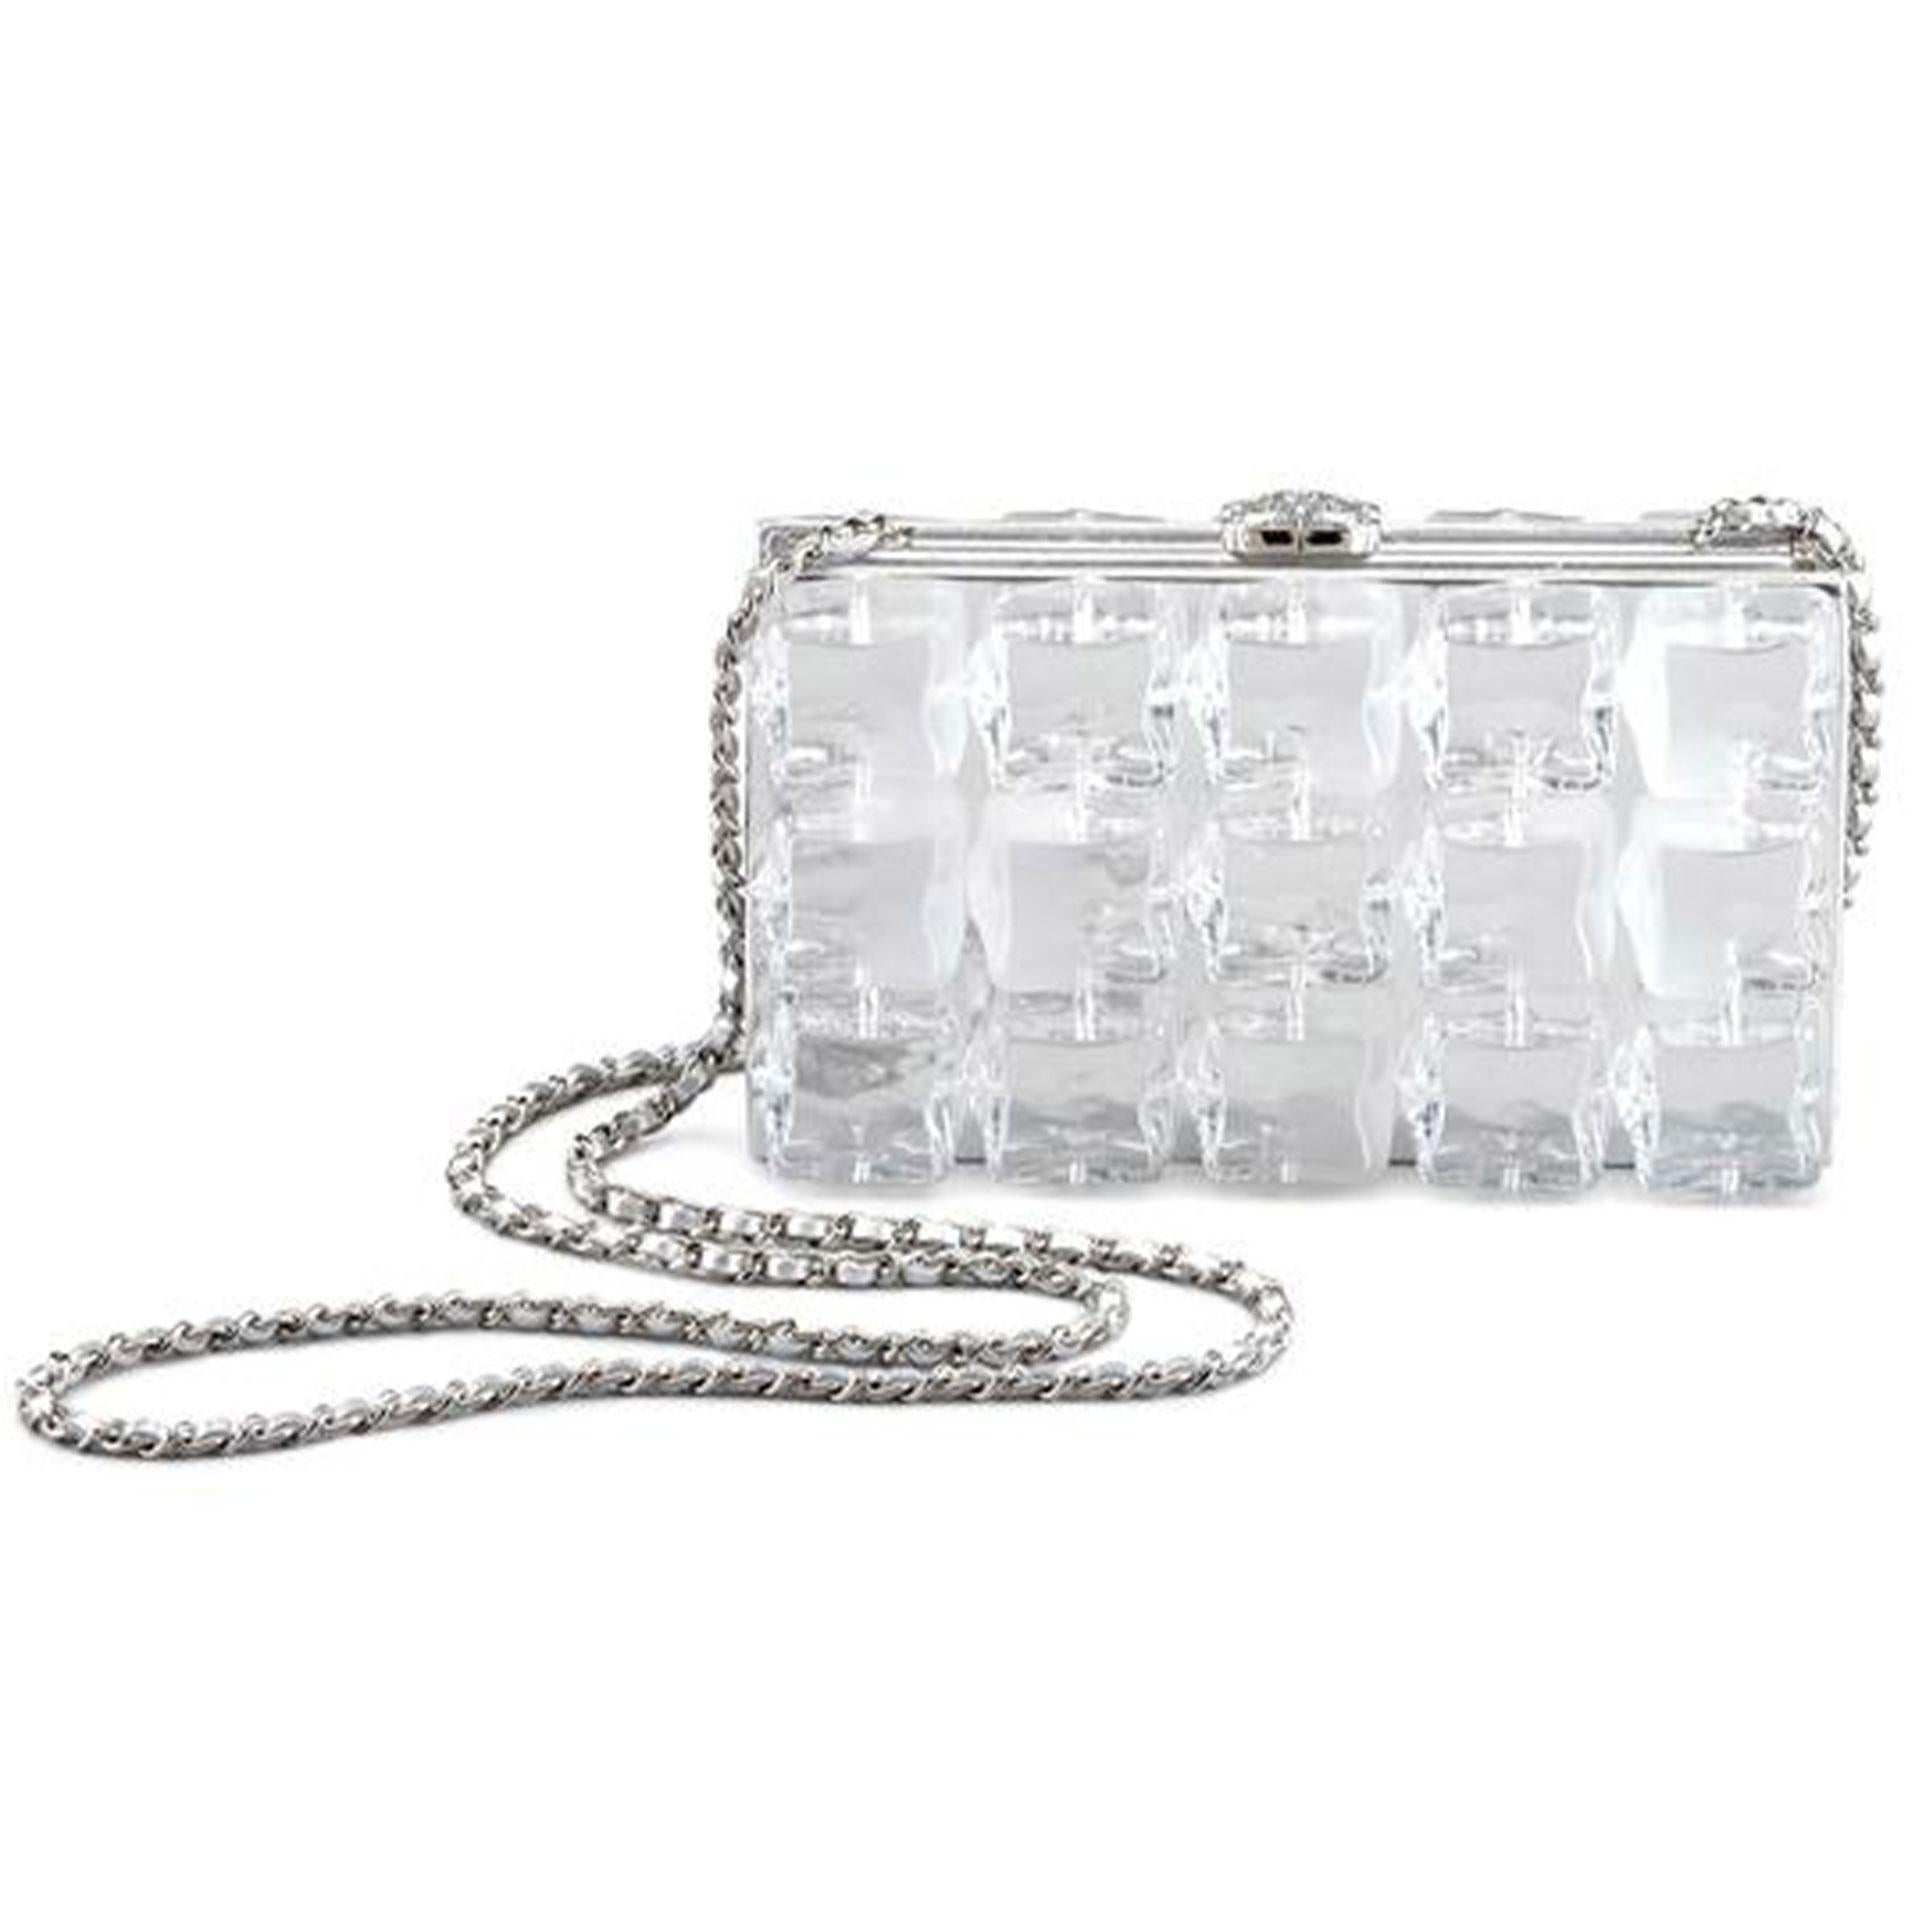 Chanel Rare Limited Edition Ice Cube Minaudière Silver Plexiglass Clutch 1